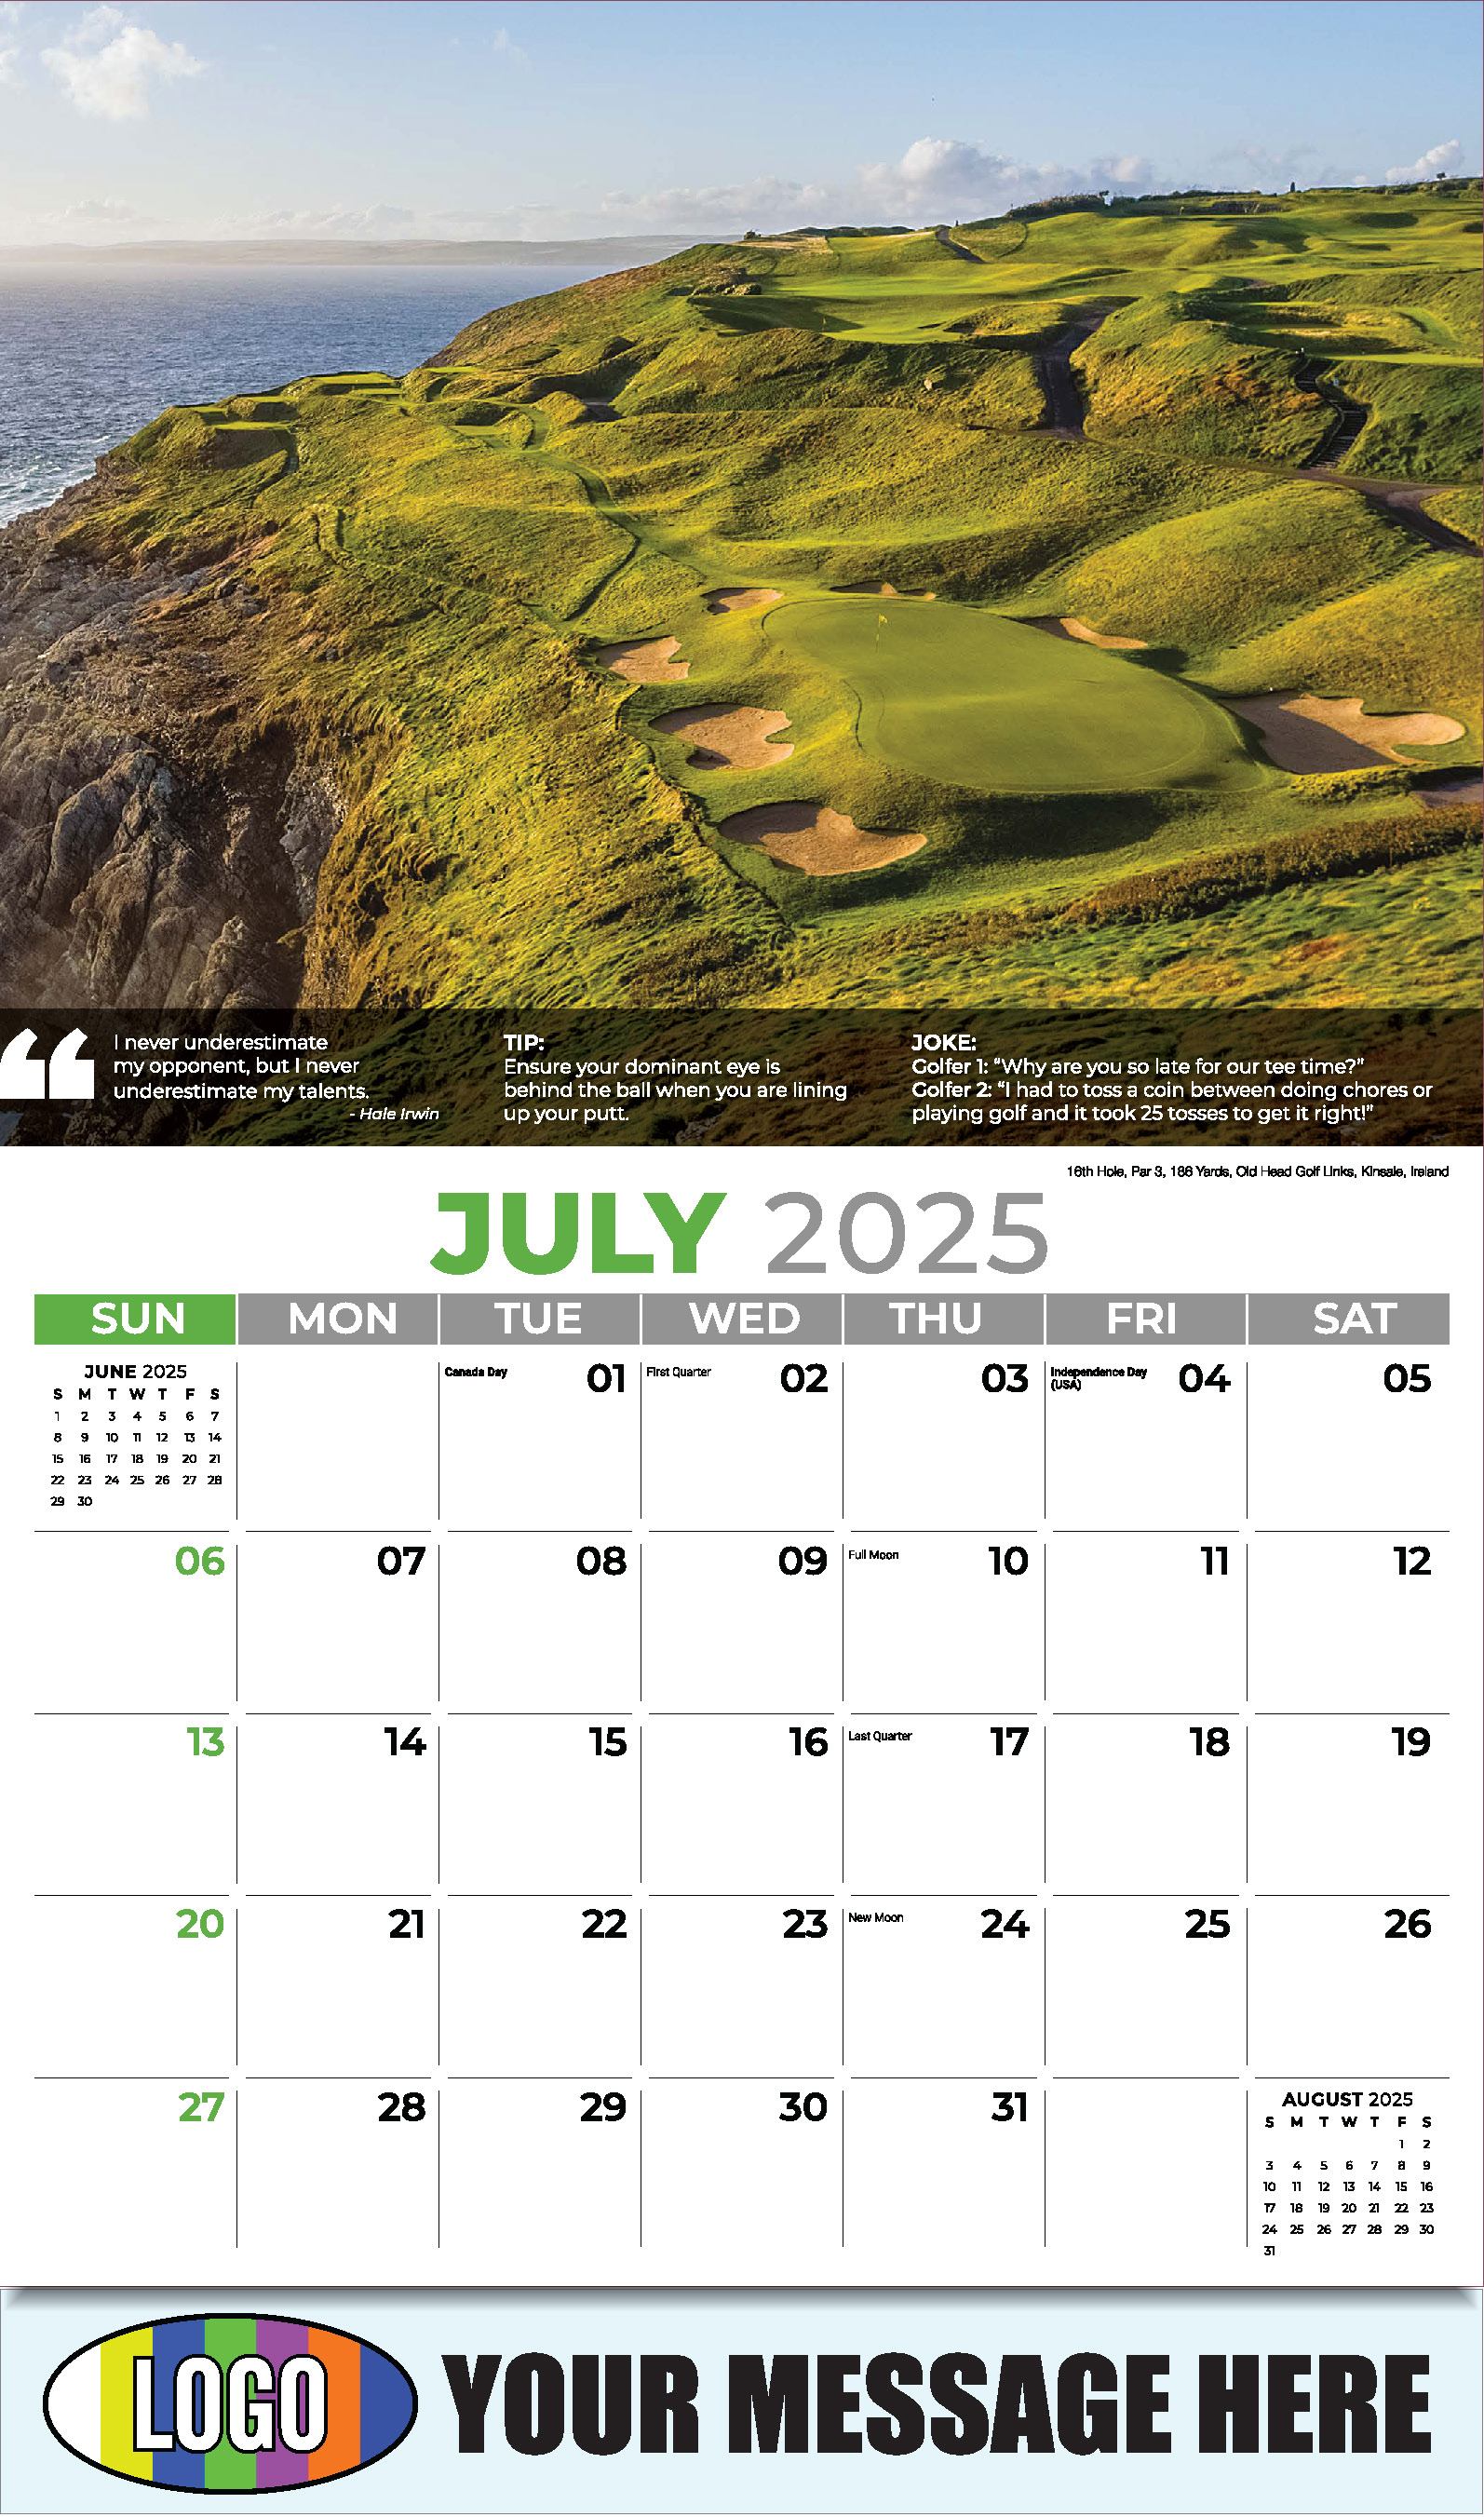 Golf Tips 2025 Business Promo Calendar - July